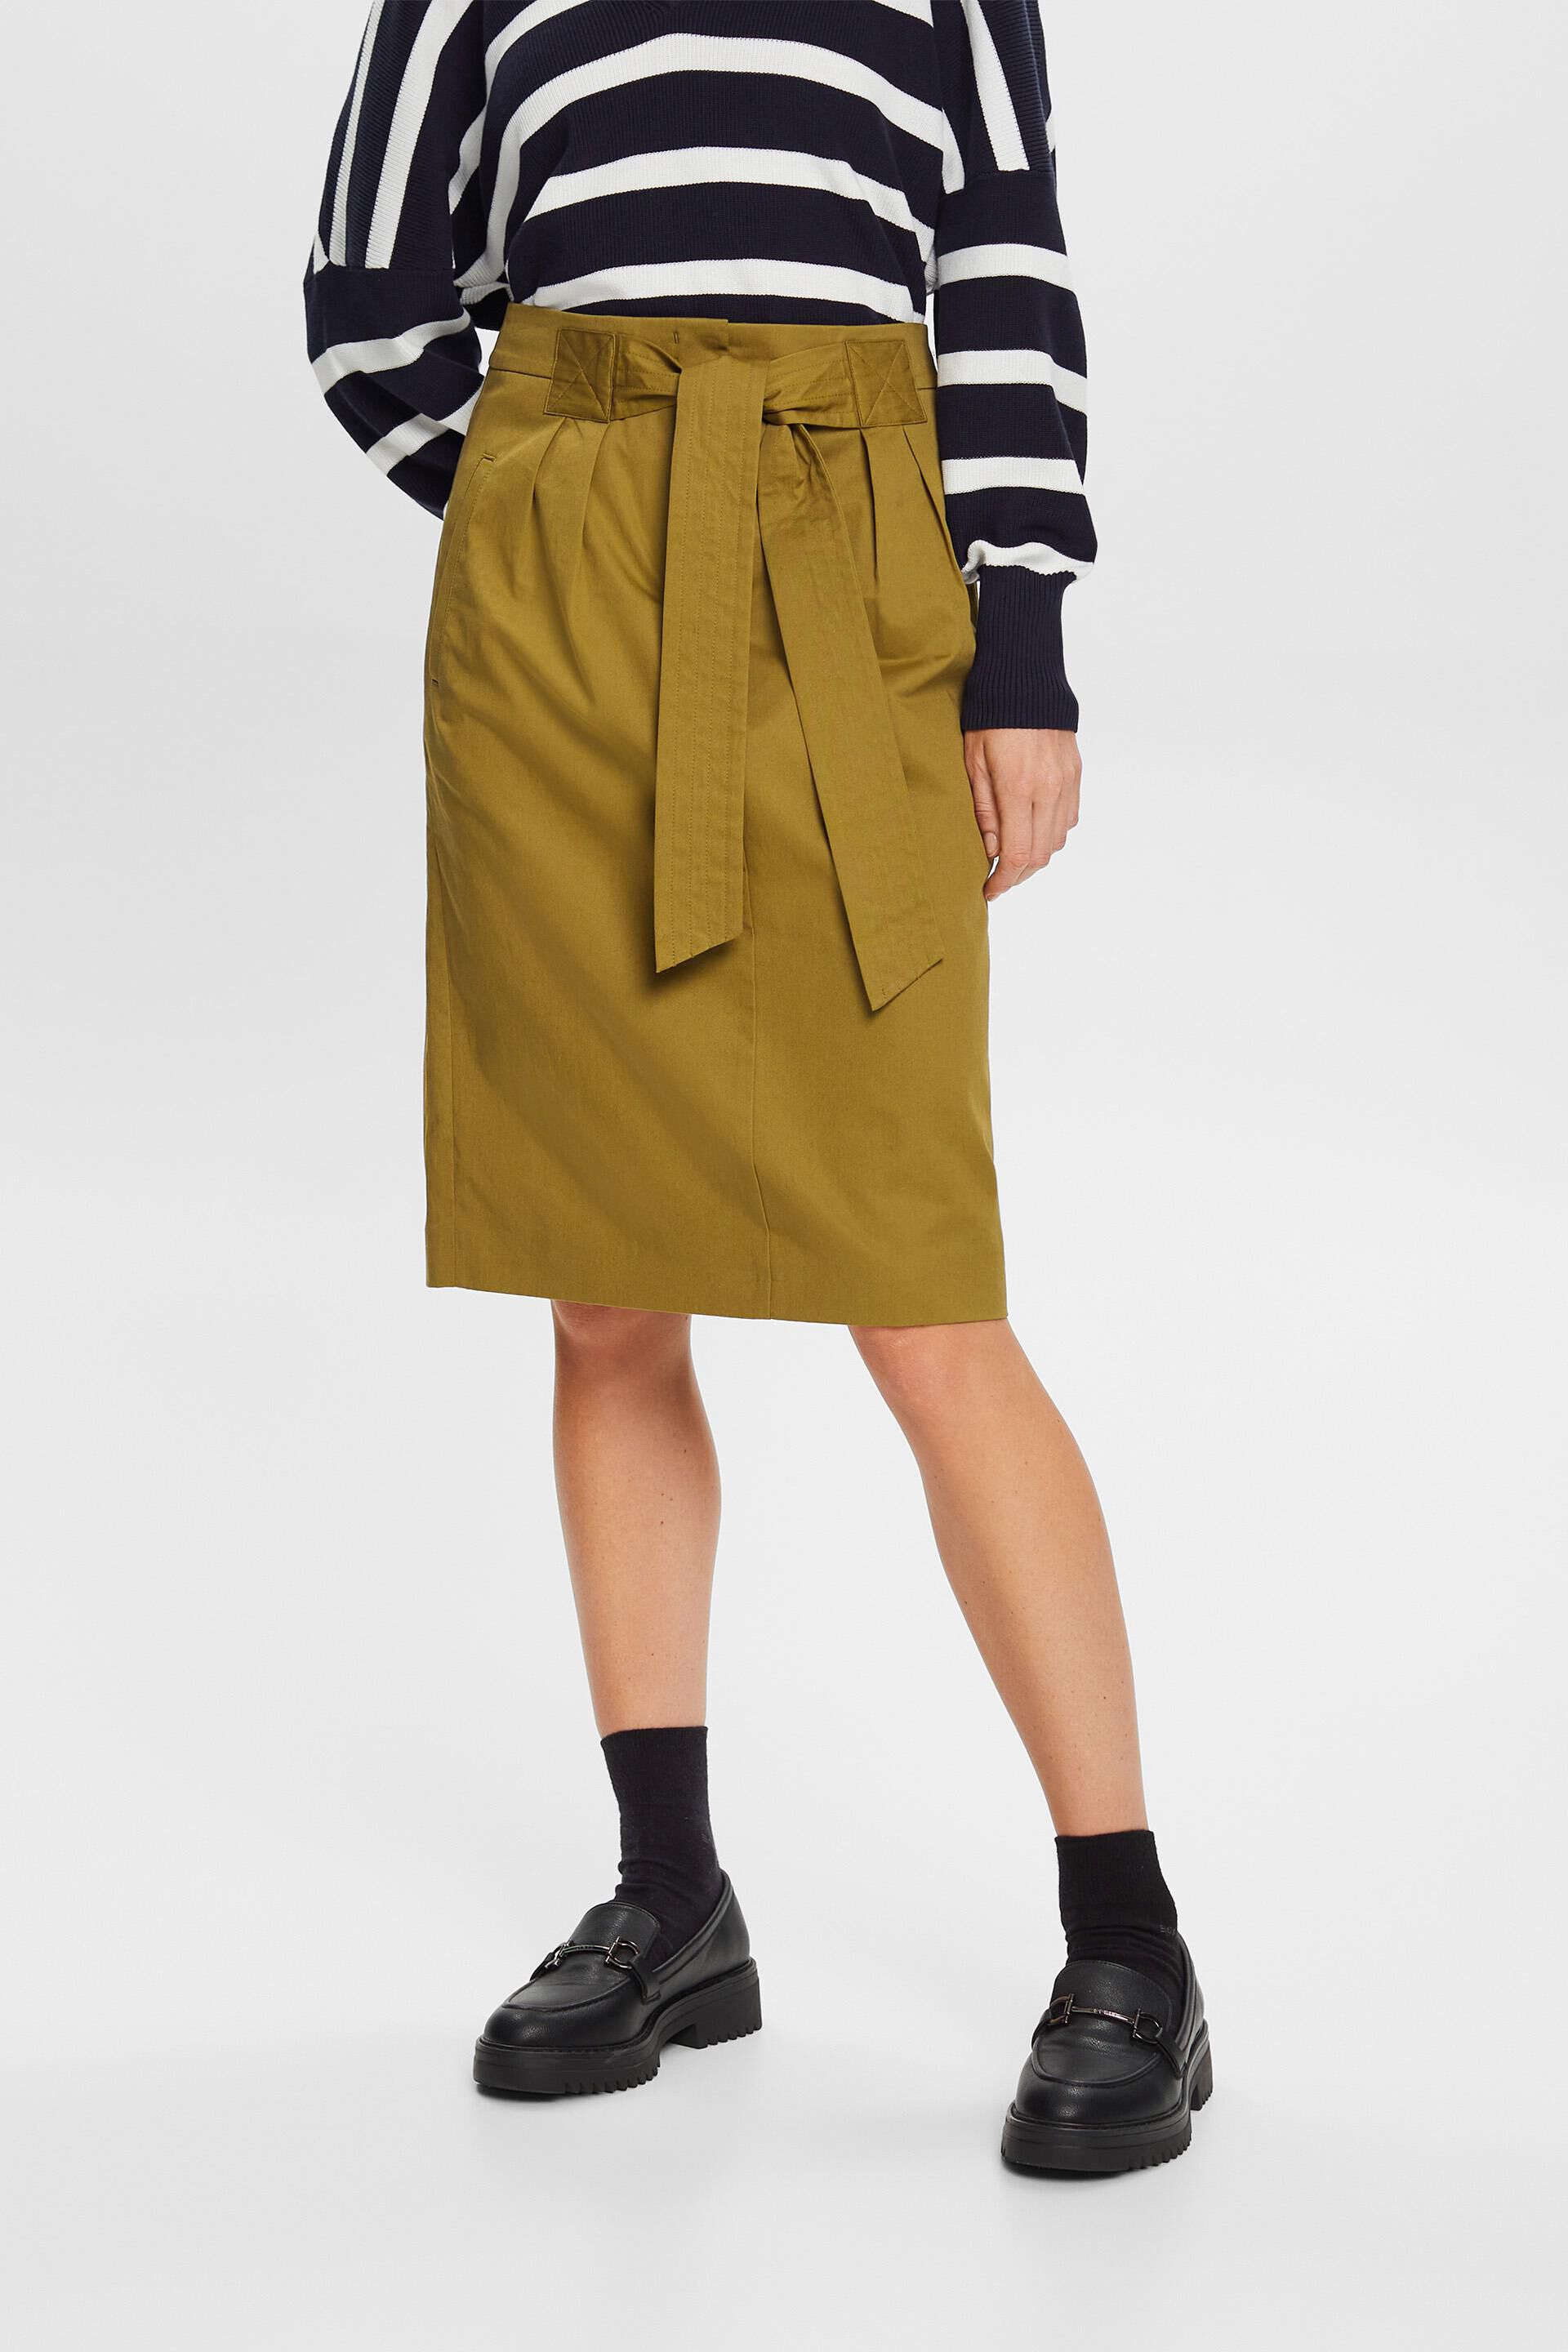 Esprit length 100% knee cotton Belted skirt,